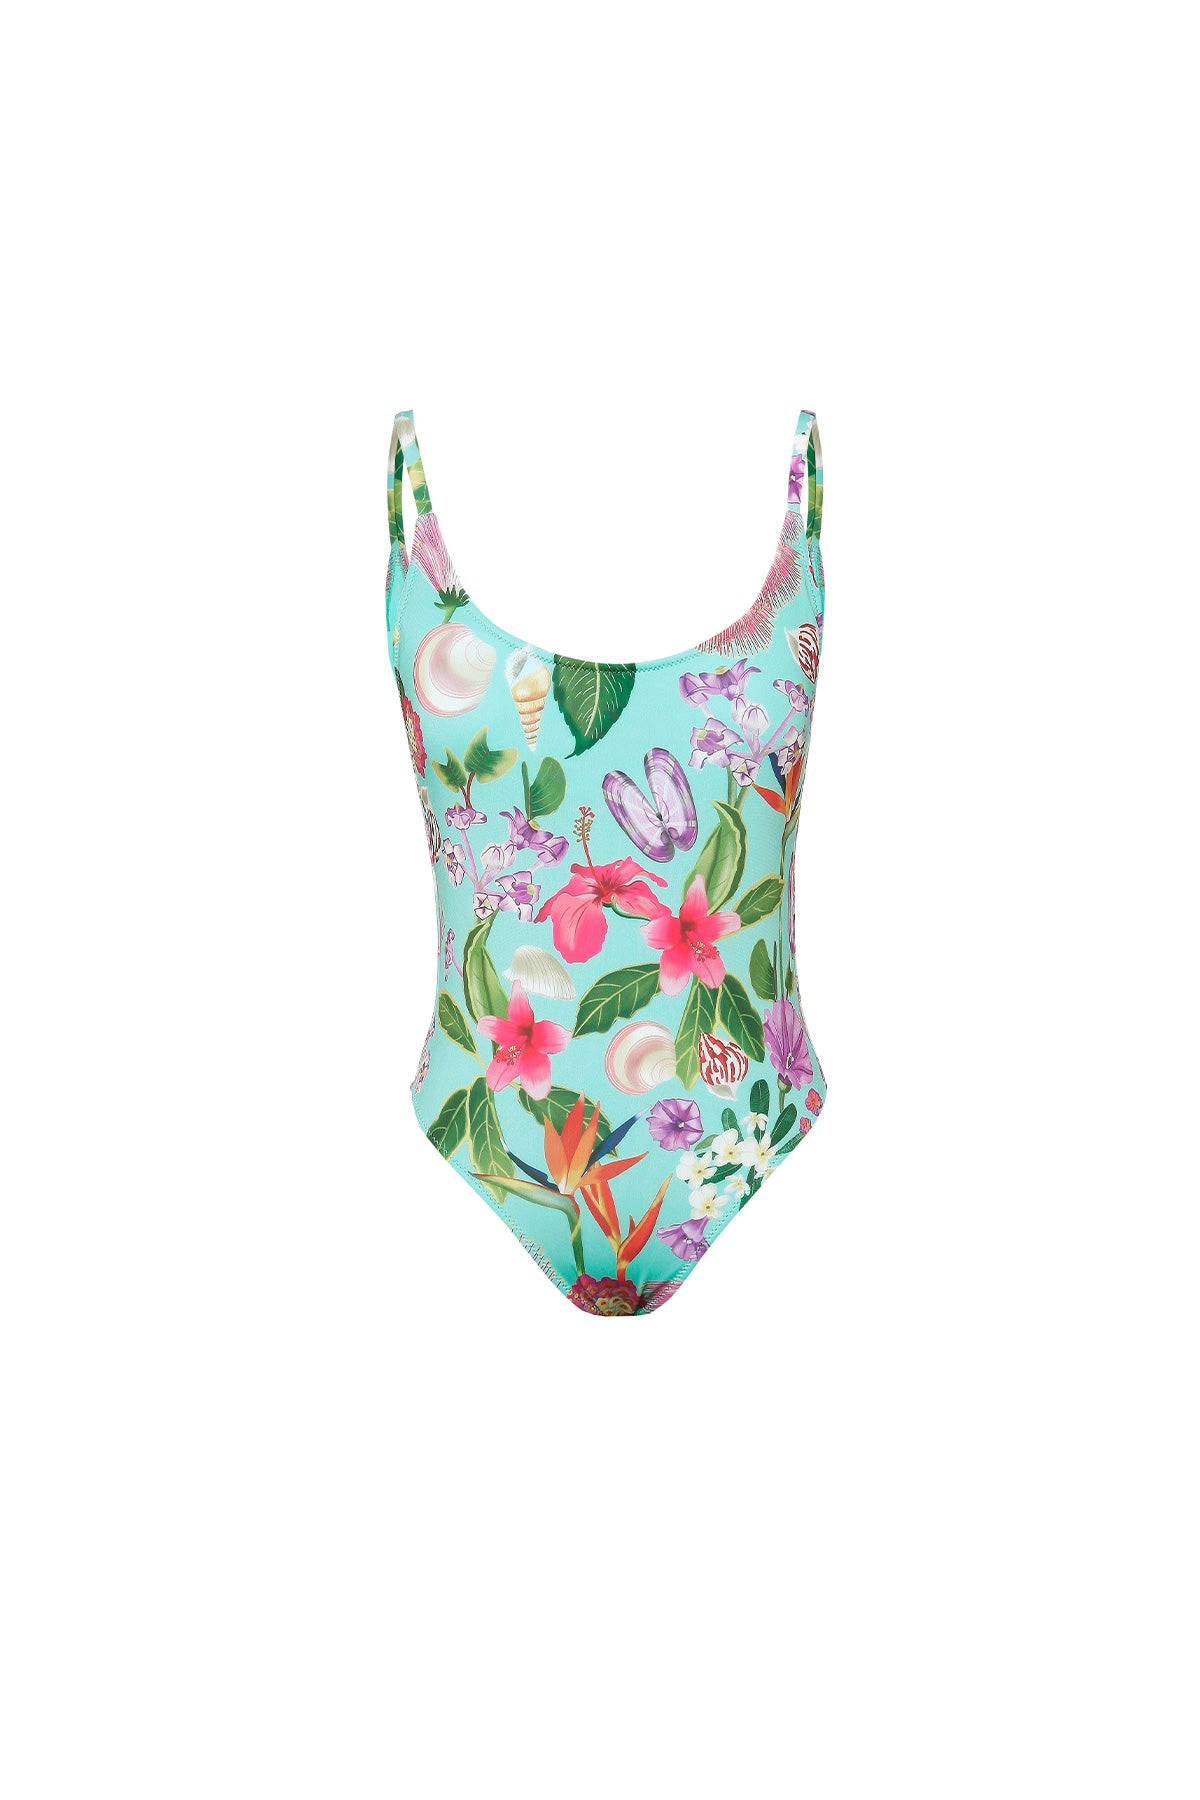 Women's Conscious One Piece Swimsuit - Aqua Seashells Floral - Verandah